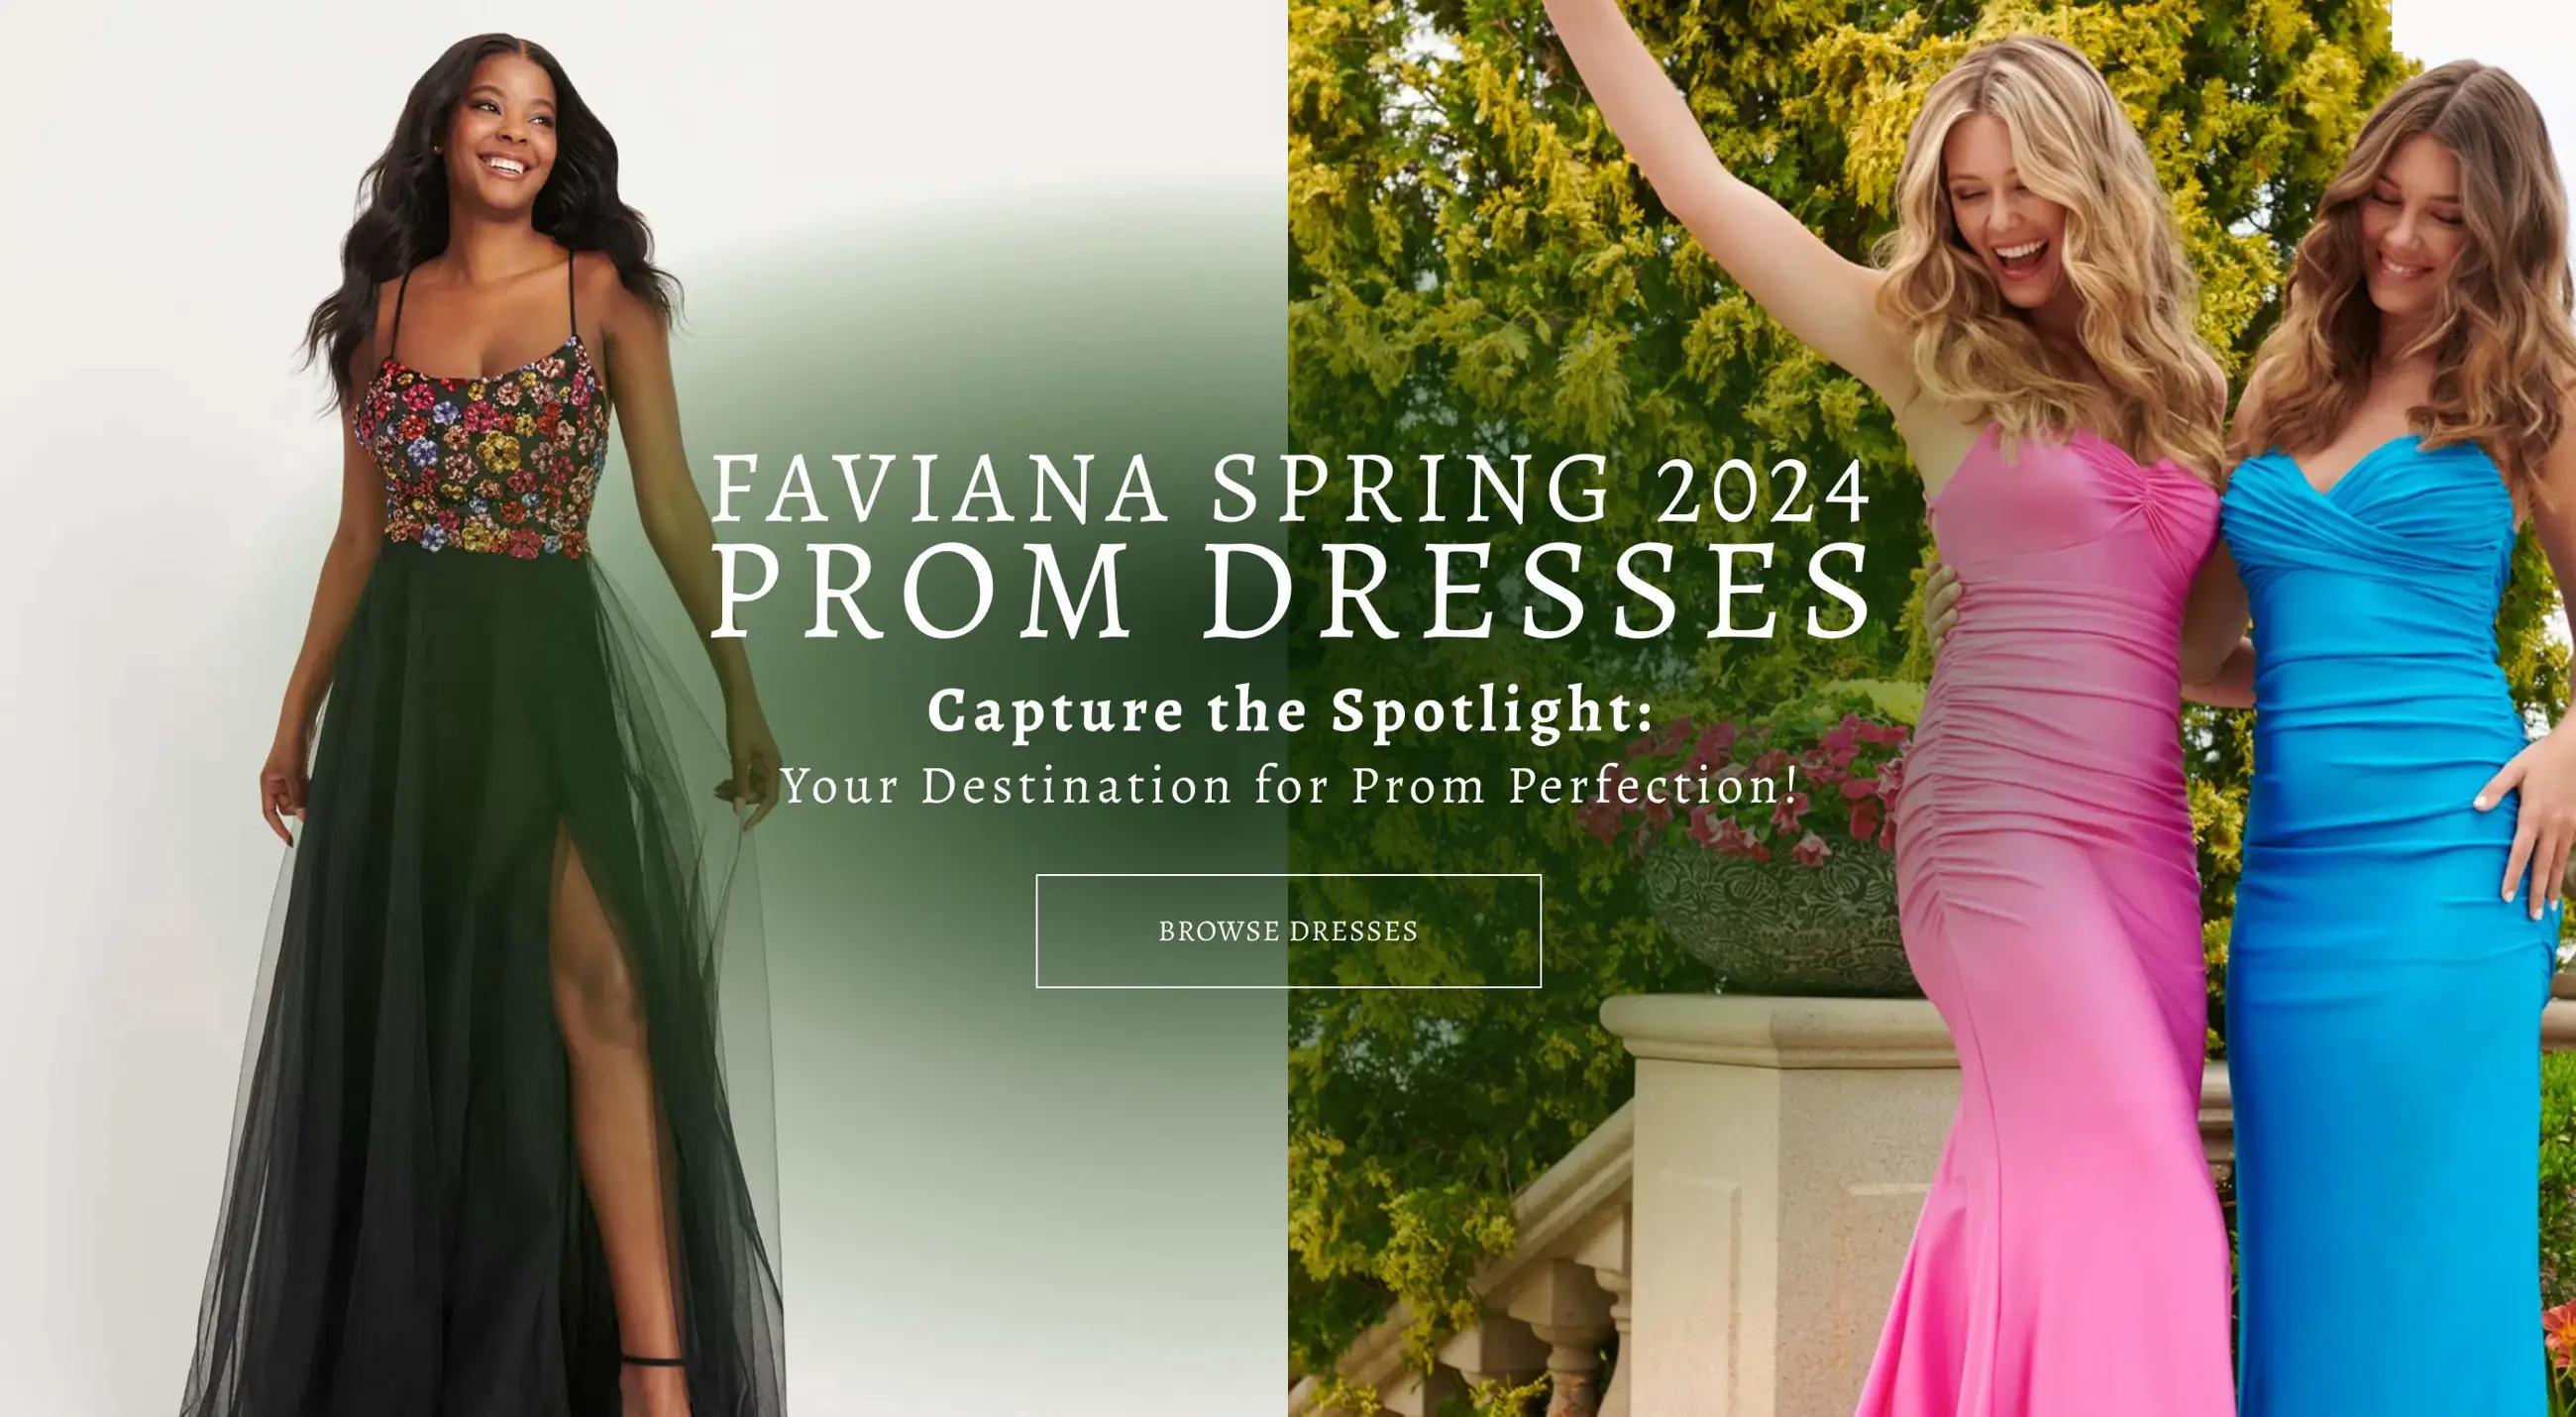 Faviana Spring 2024